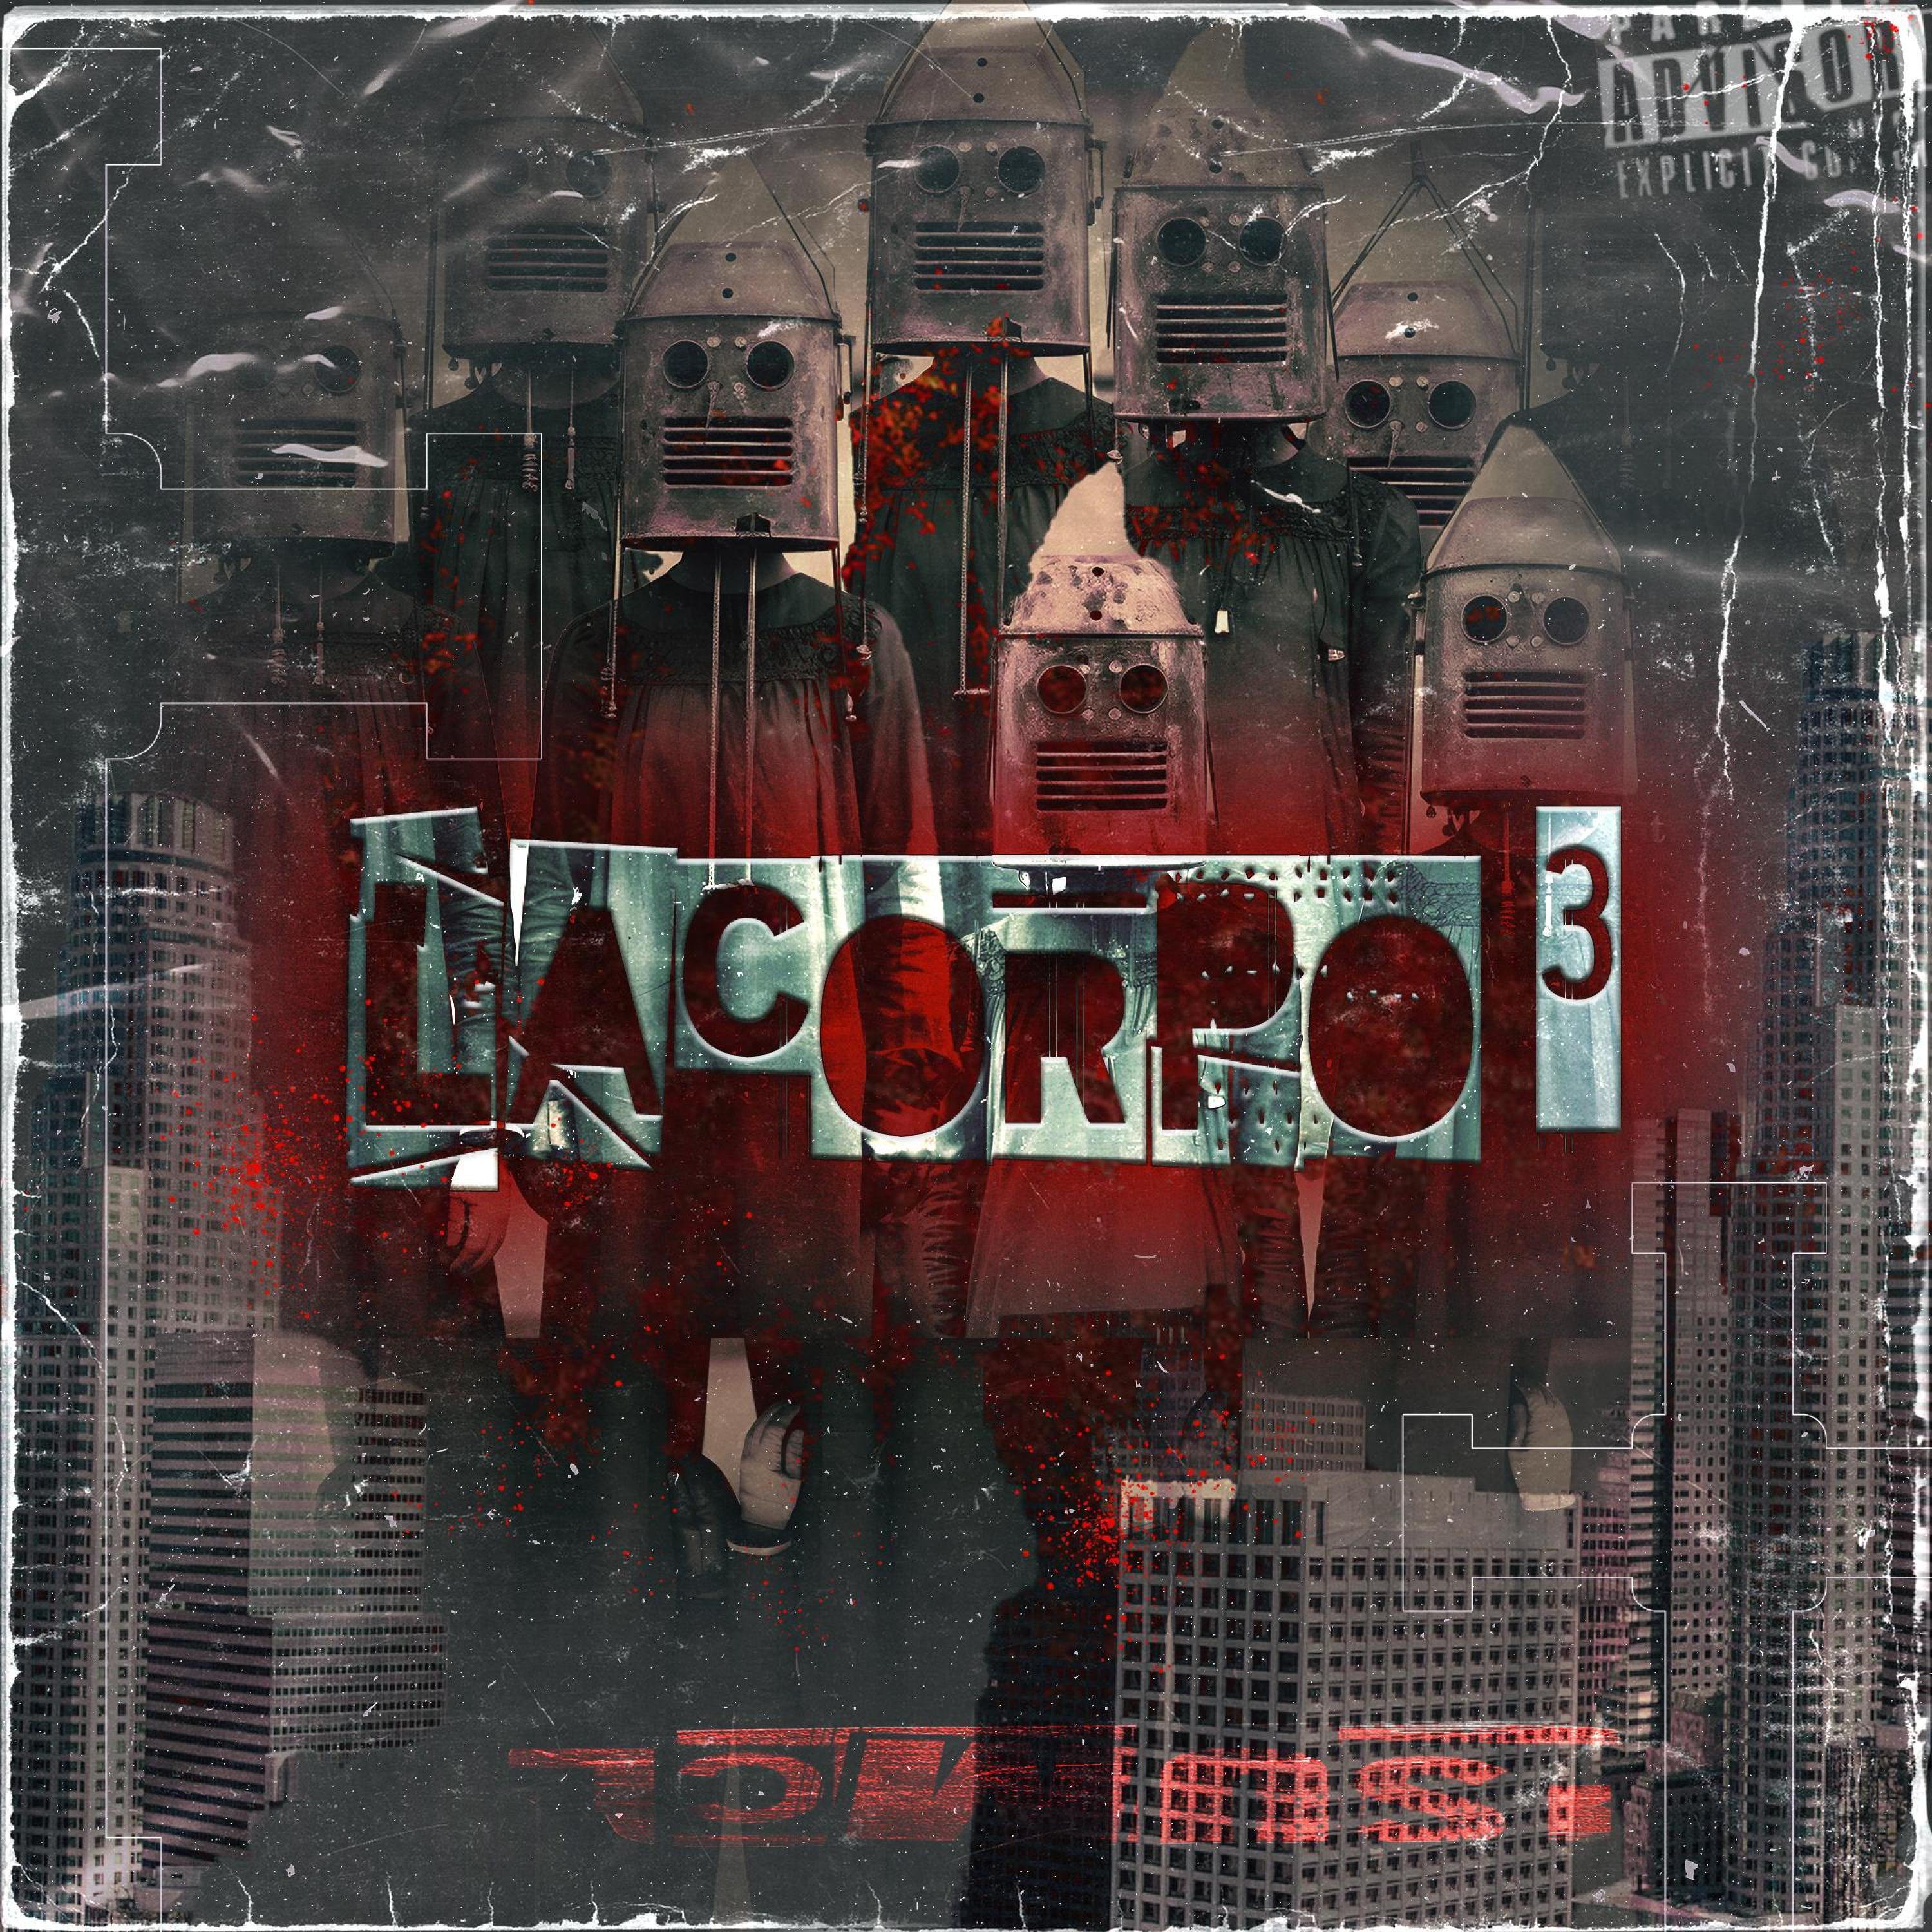 LcMusic LaCorpo - Subele El Volumen (feat. Buggie Sau, Eme Lcb & PEPIN MC)